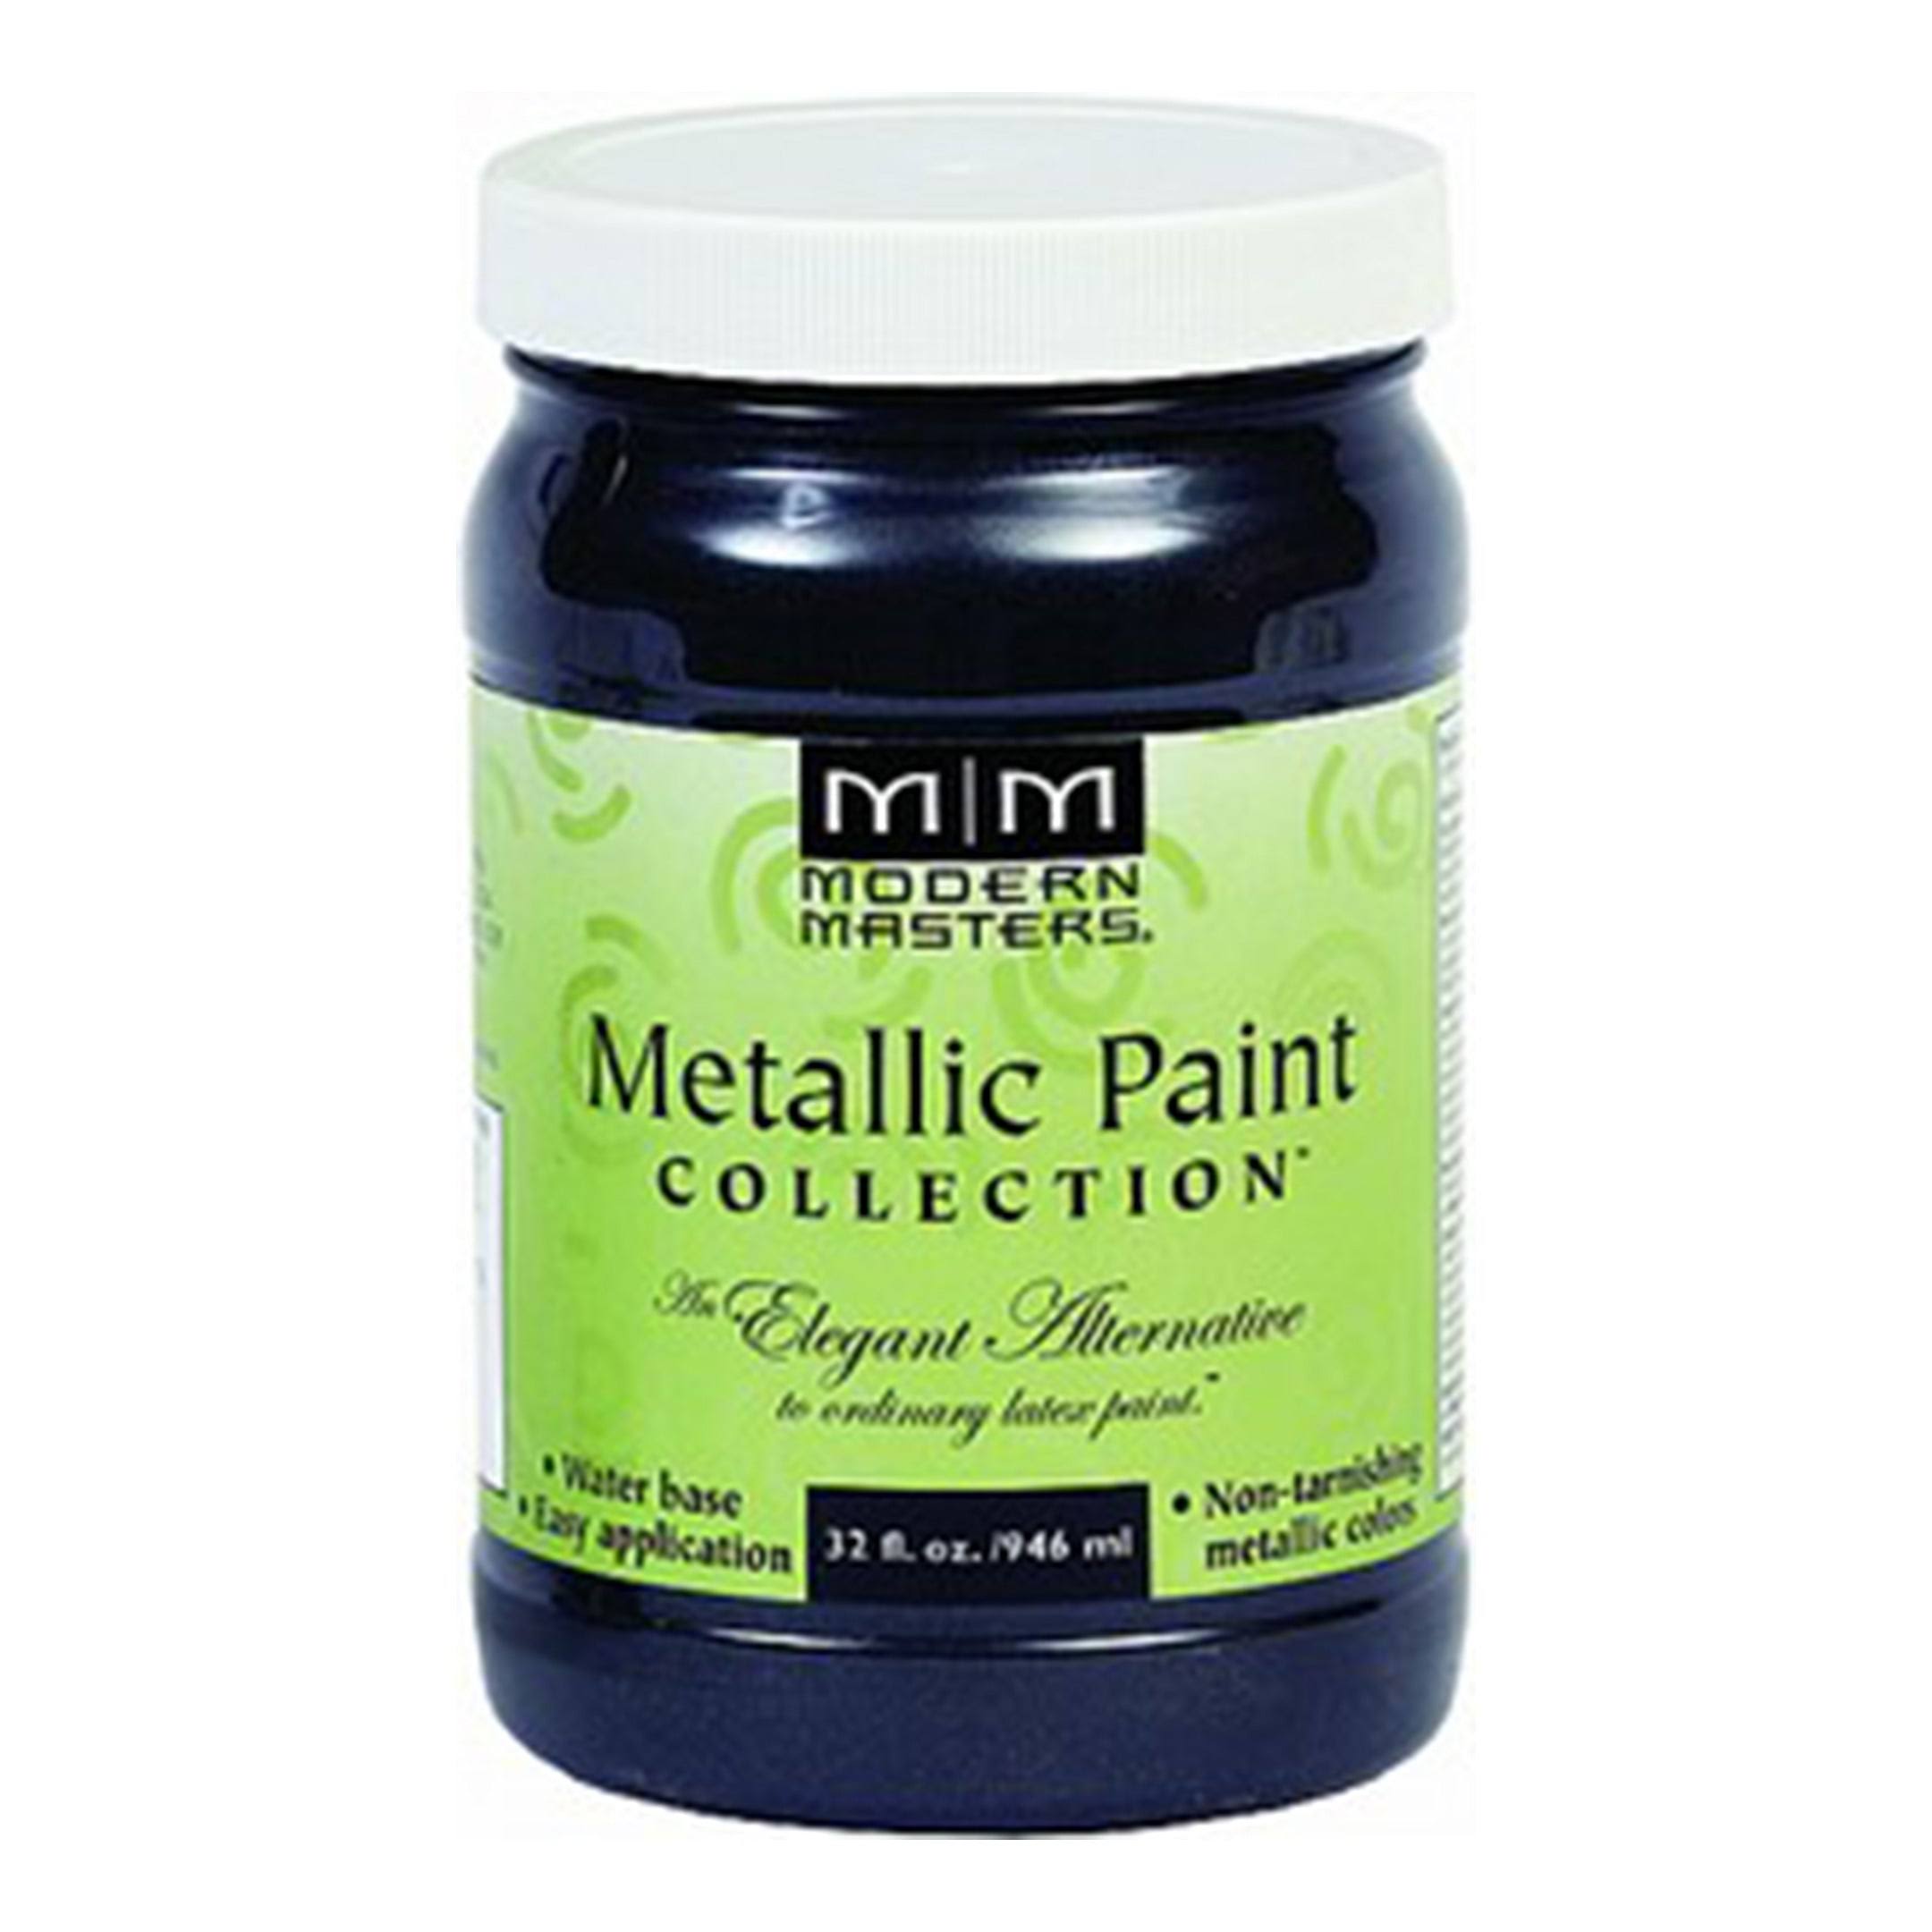 Modern Masters Metallic Paint - Black Pearl, 946ml